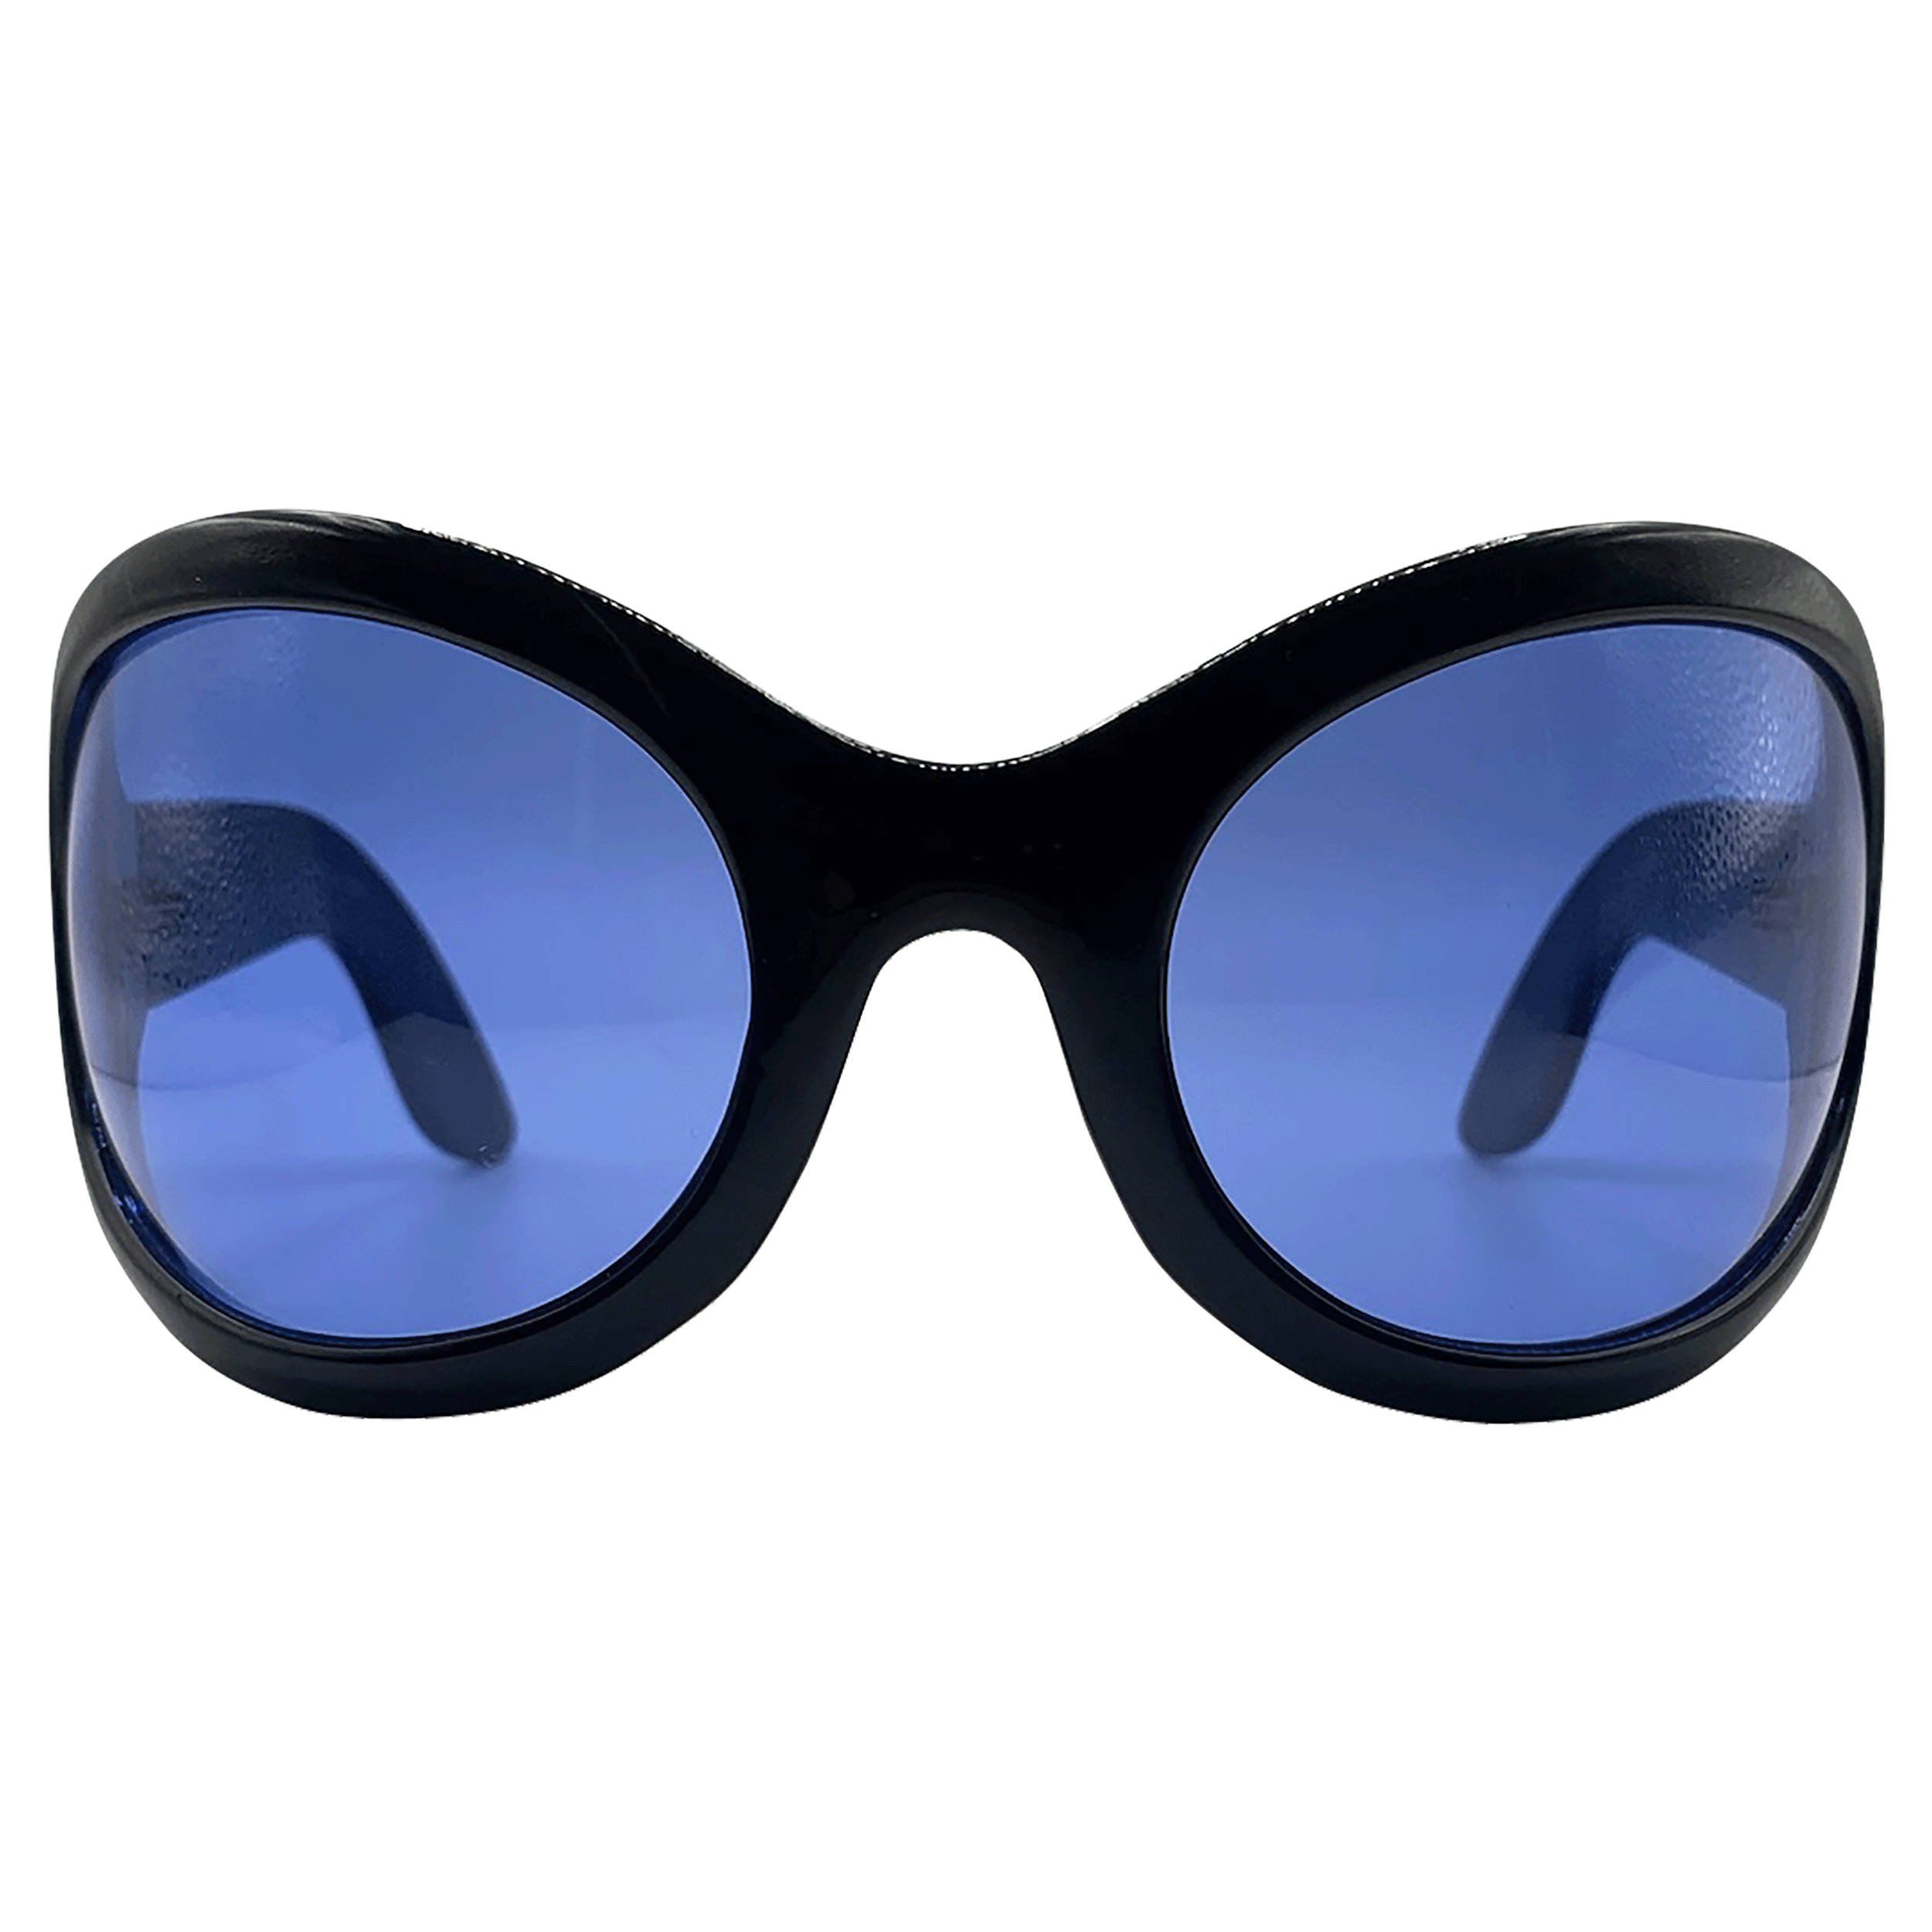 Selling Sunglasses | Best Seller Glasses | Our Most Popular Eyewear | Giant Vintage Sunglasses